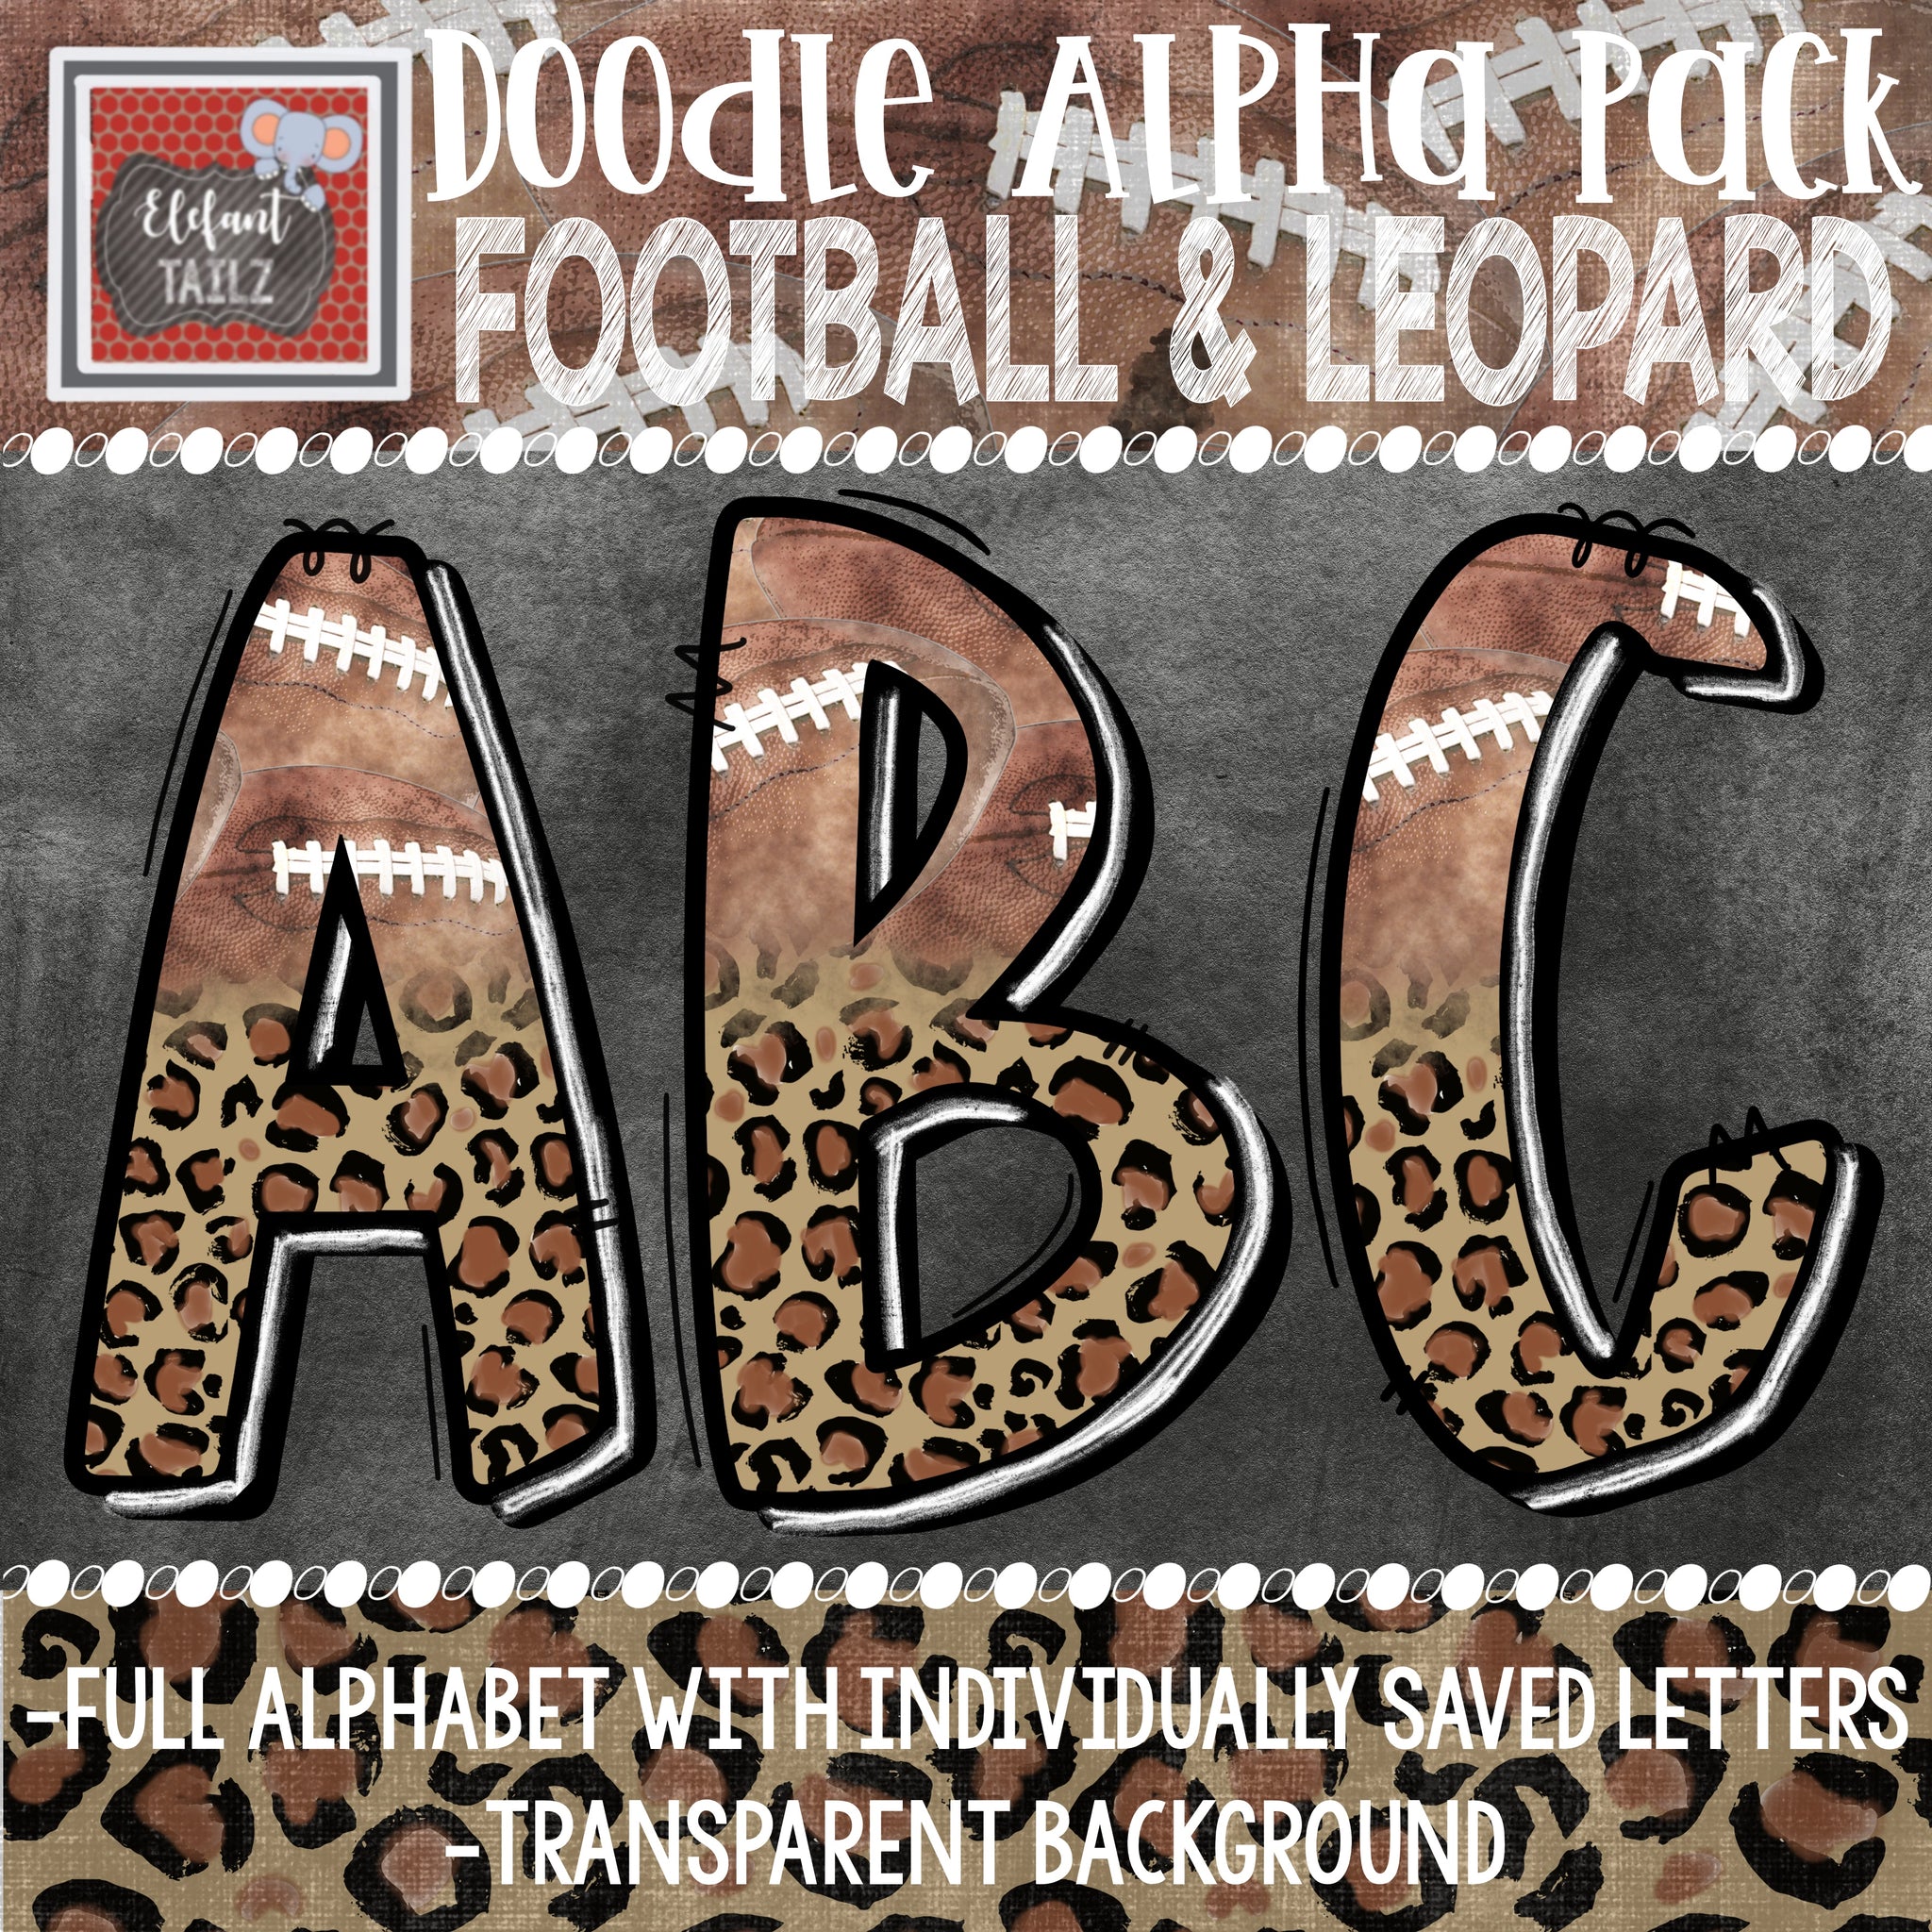 Doodle Alpha - Football & Leopard